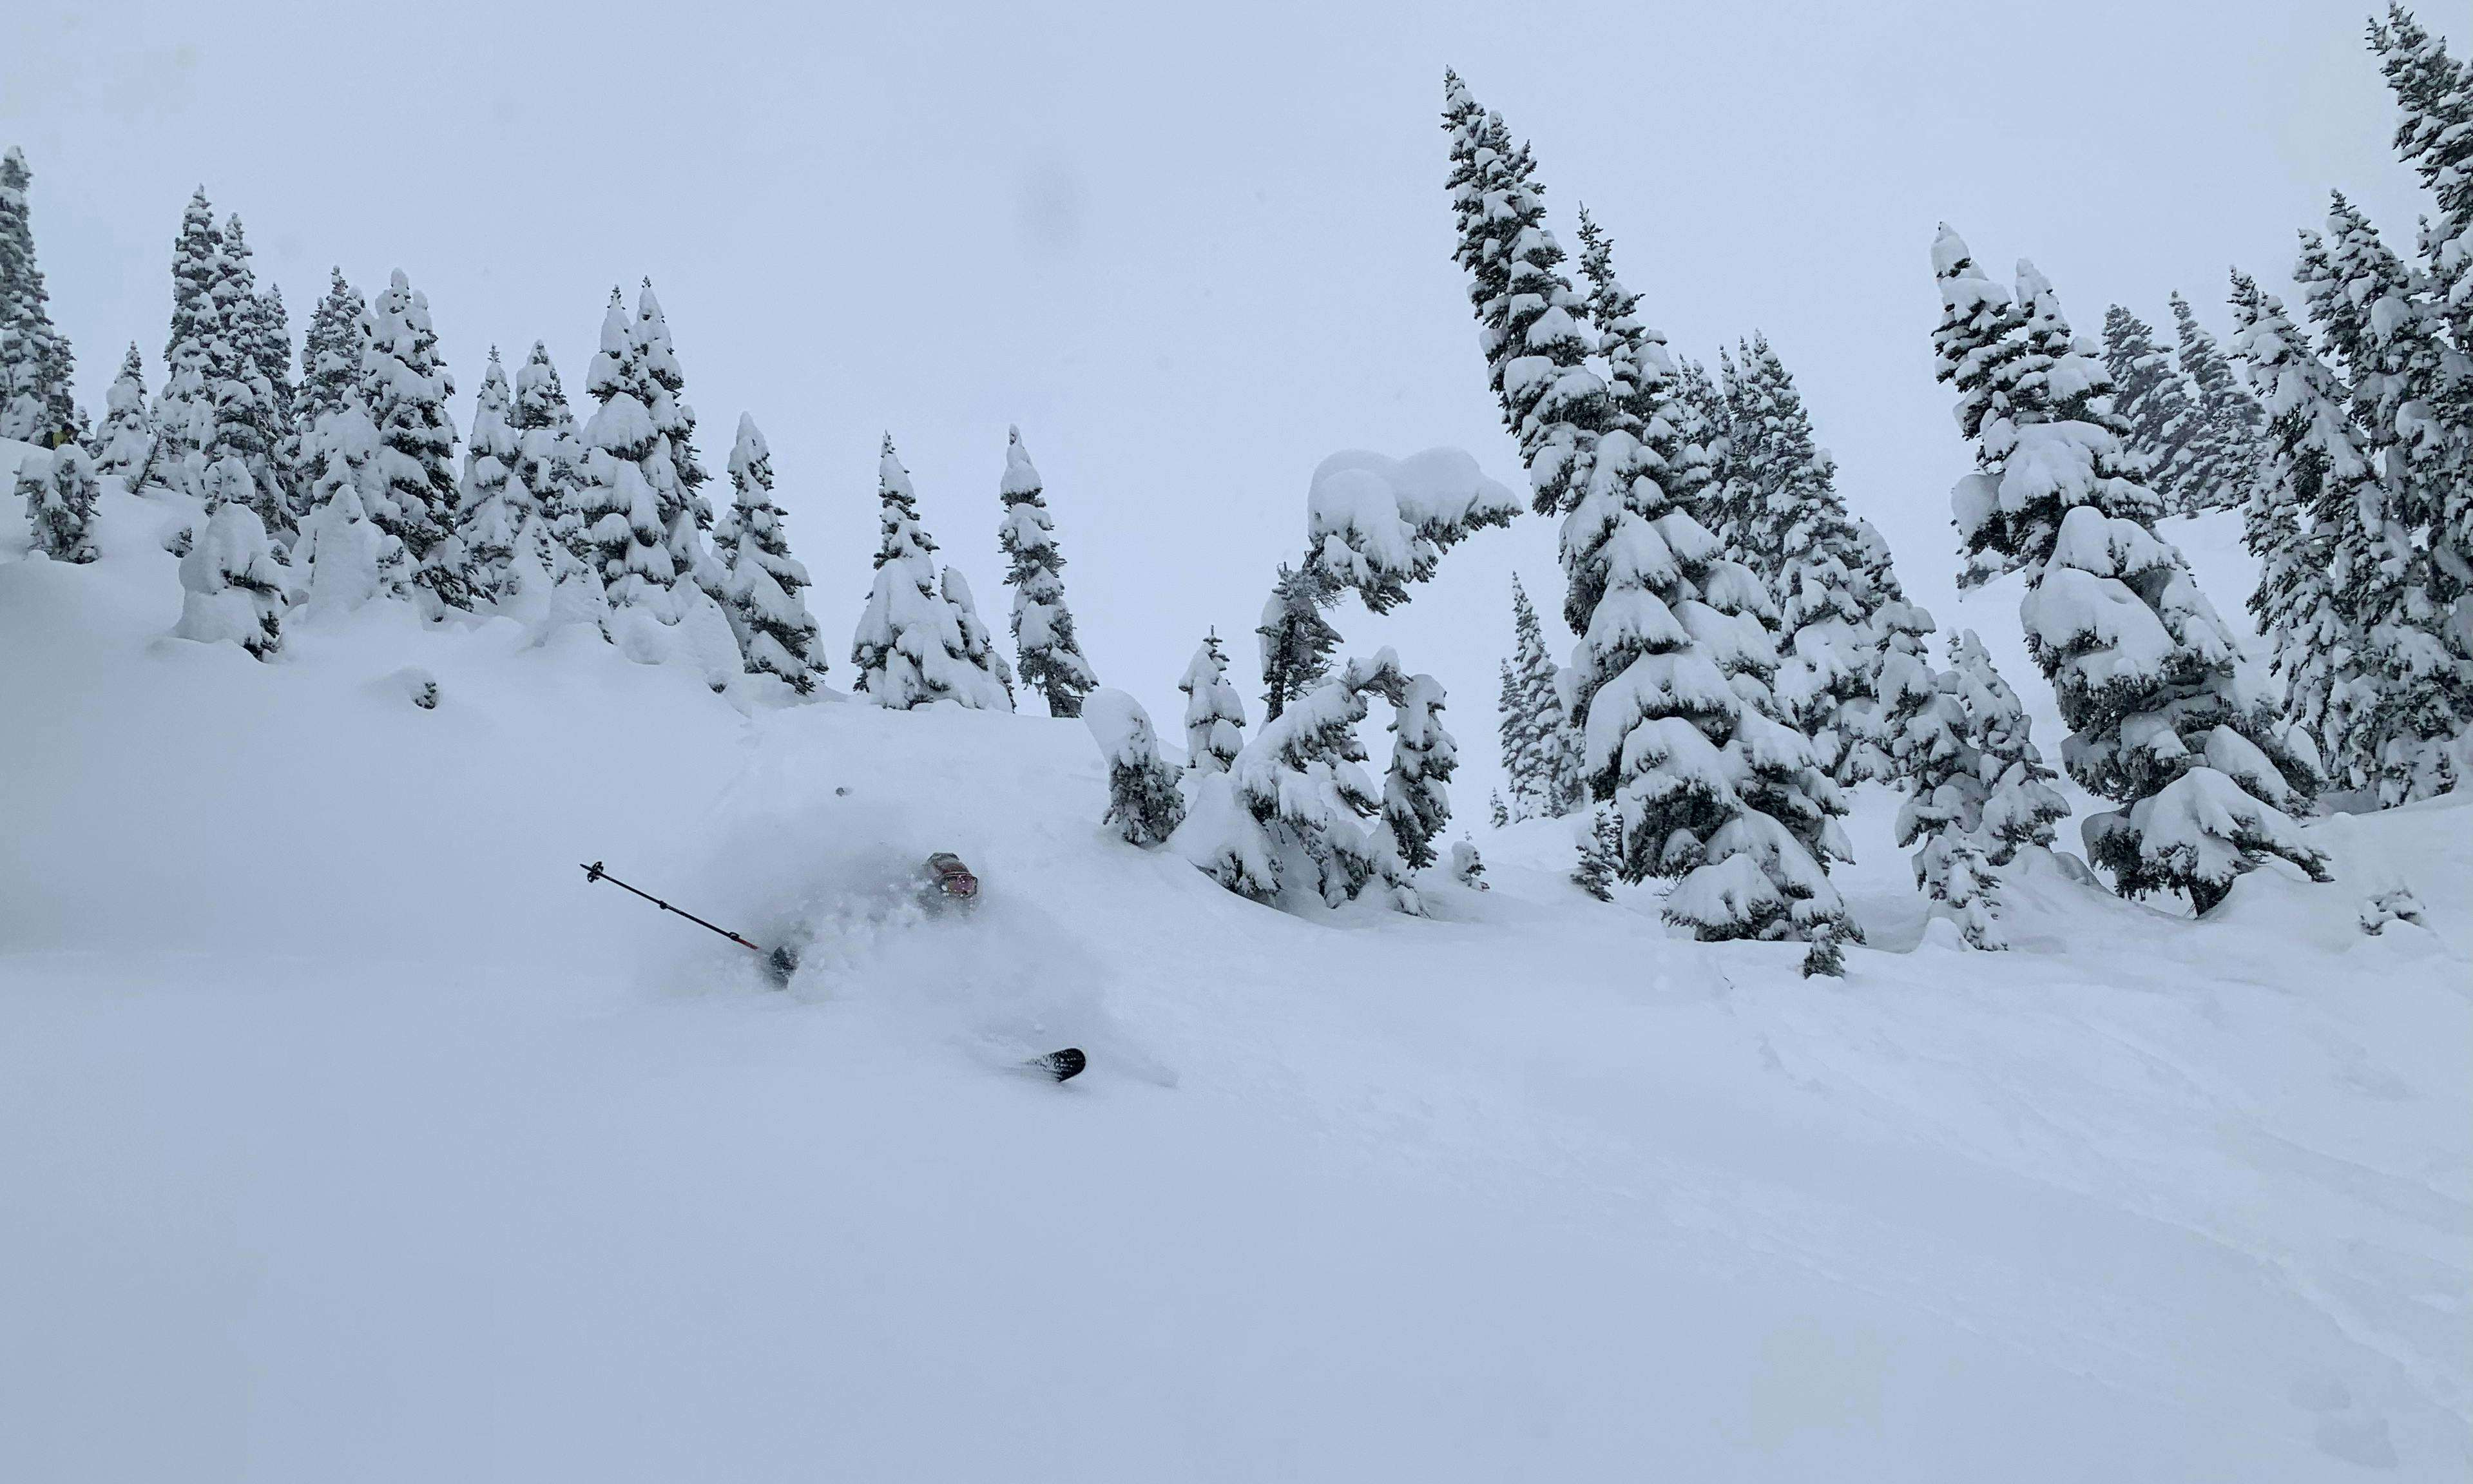 Skier in deep powder